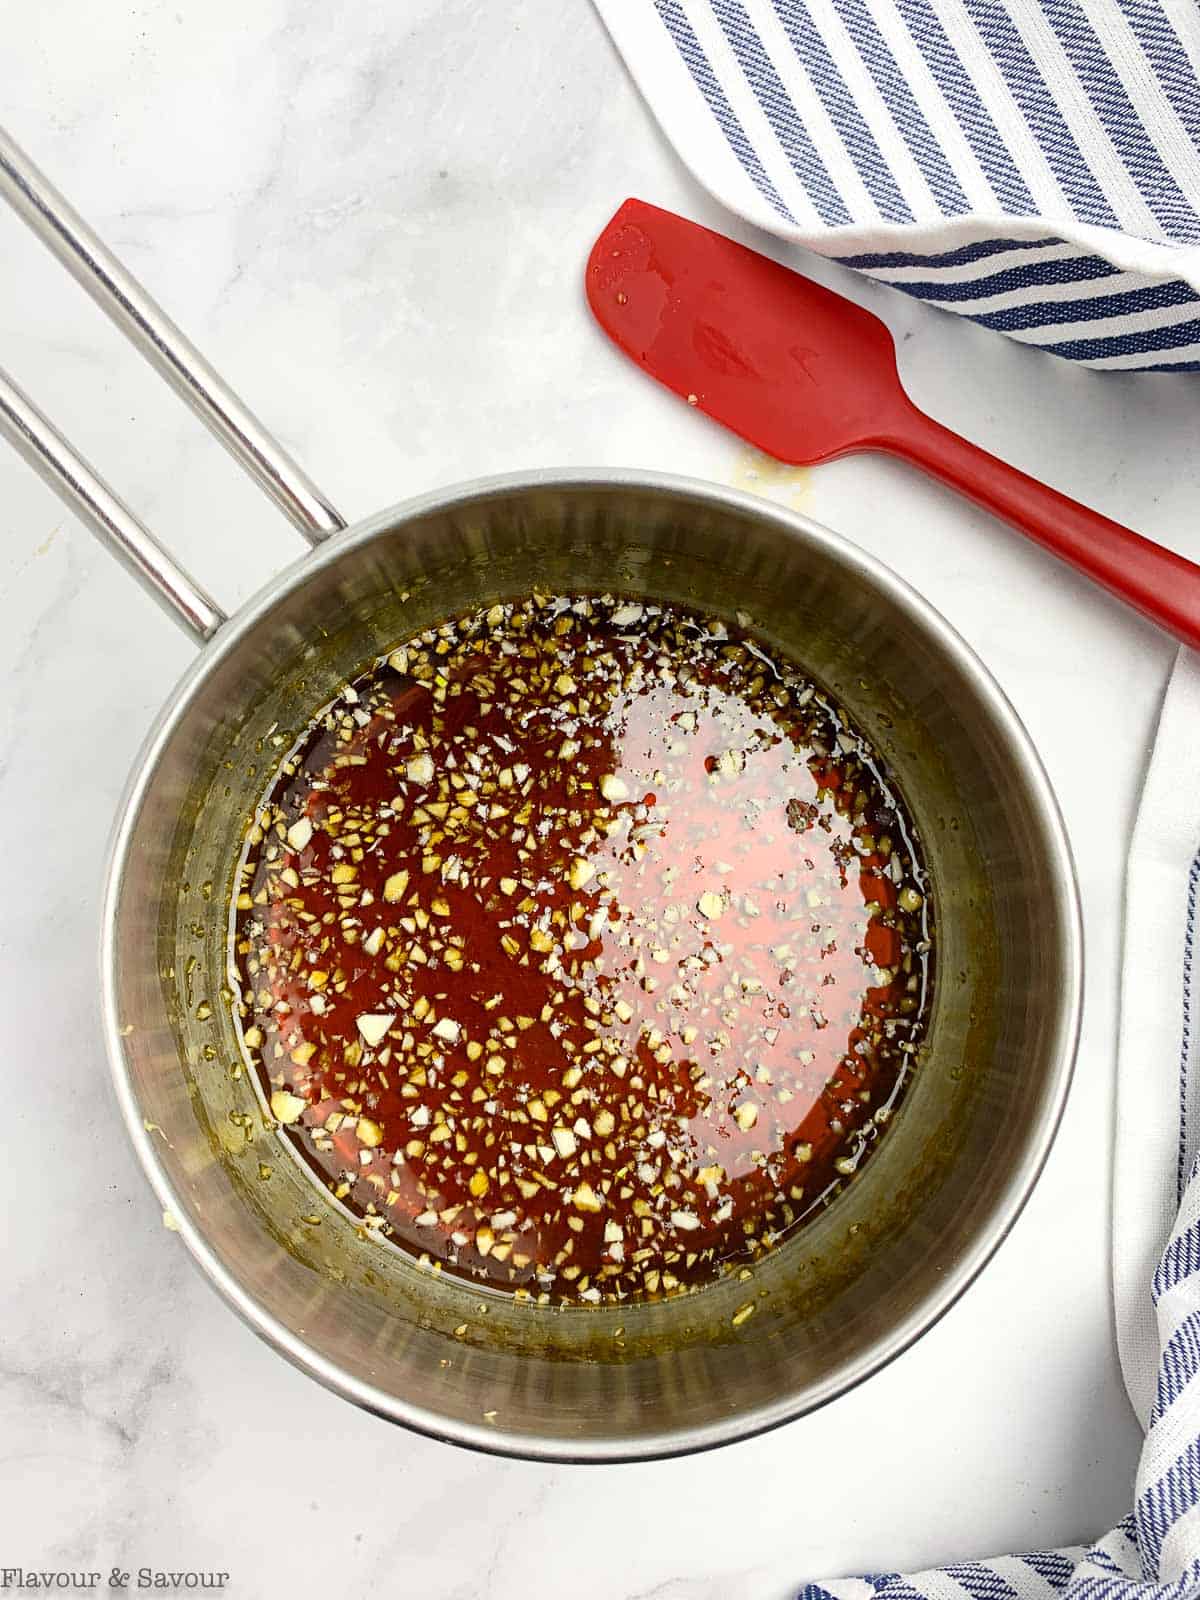 Honey garlic sauce ingredients in a saucepan.